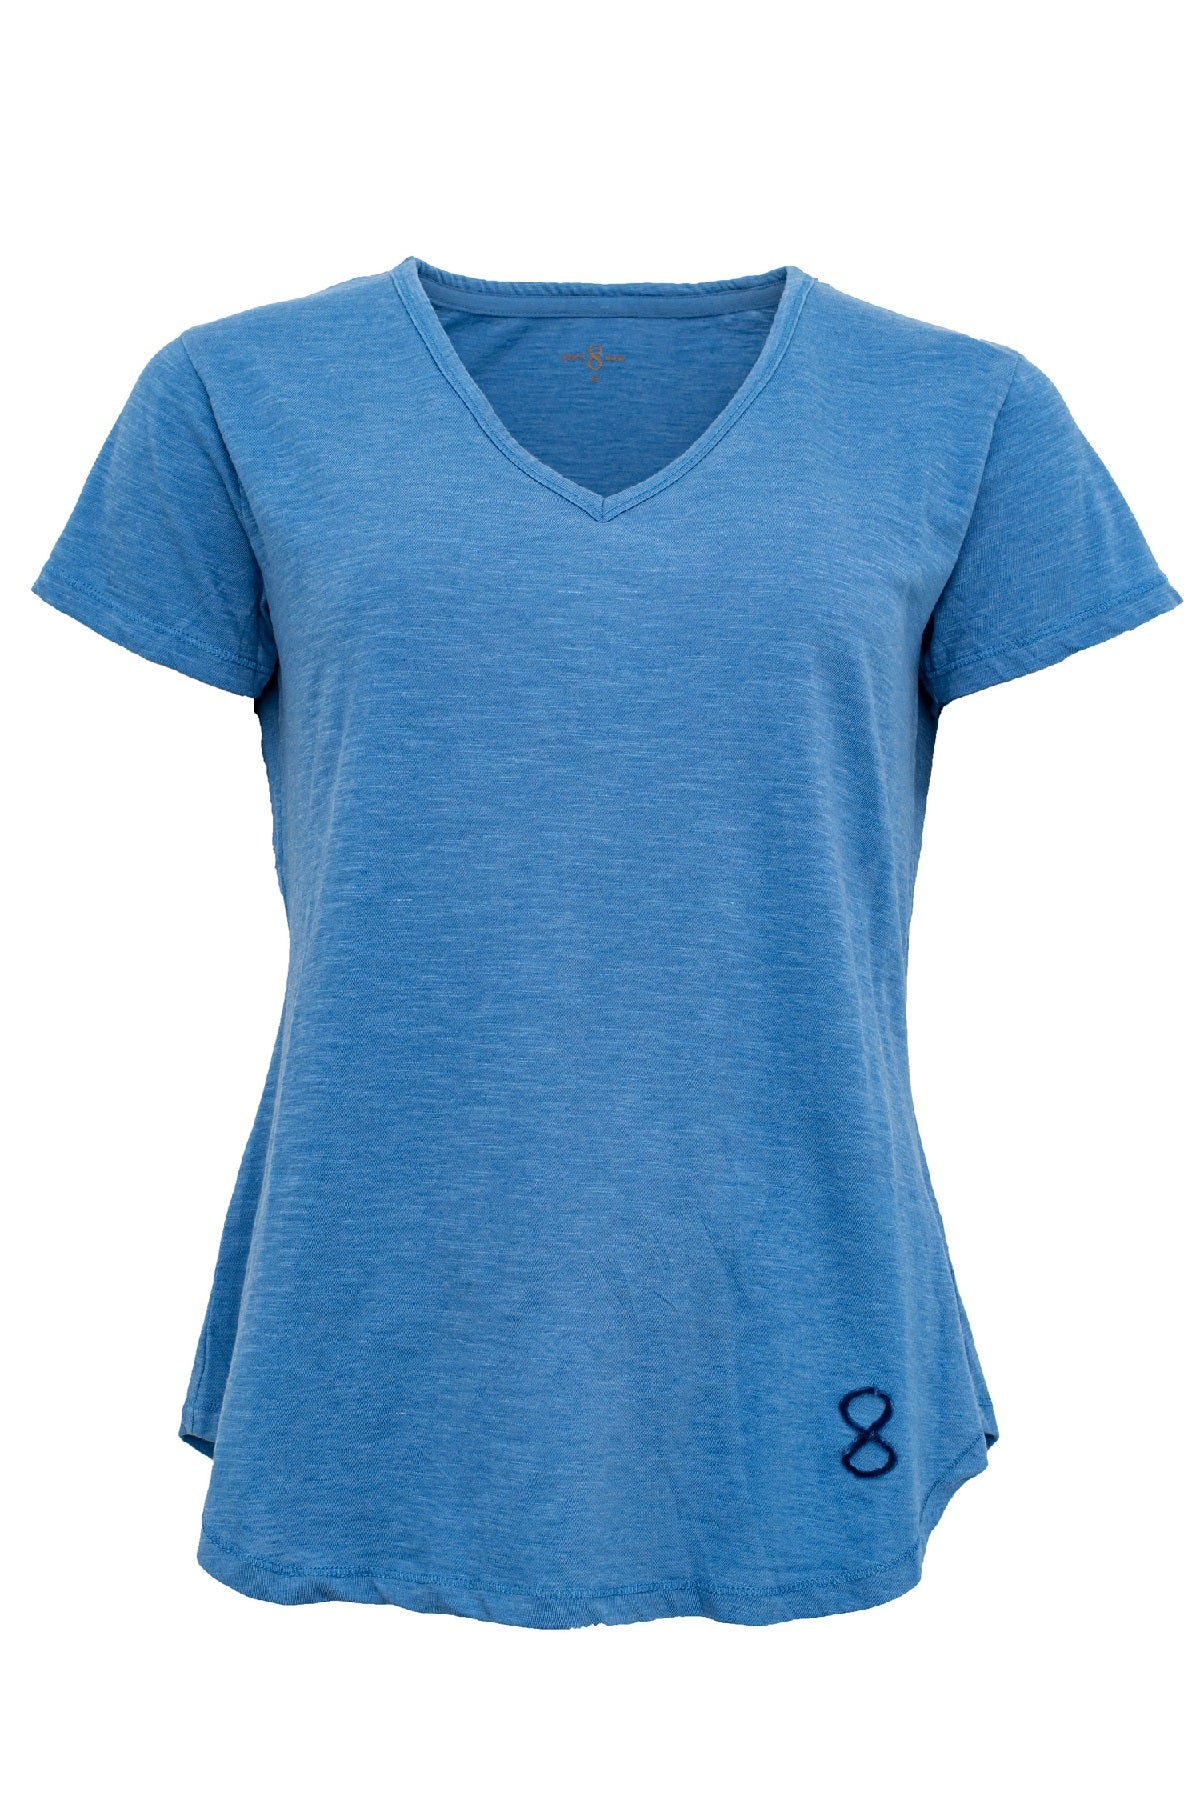 Costamani T-shirt logo v-neck, Royal blue